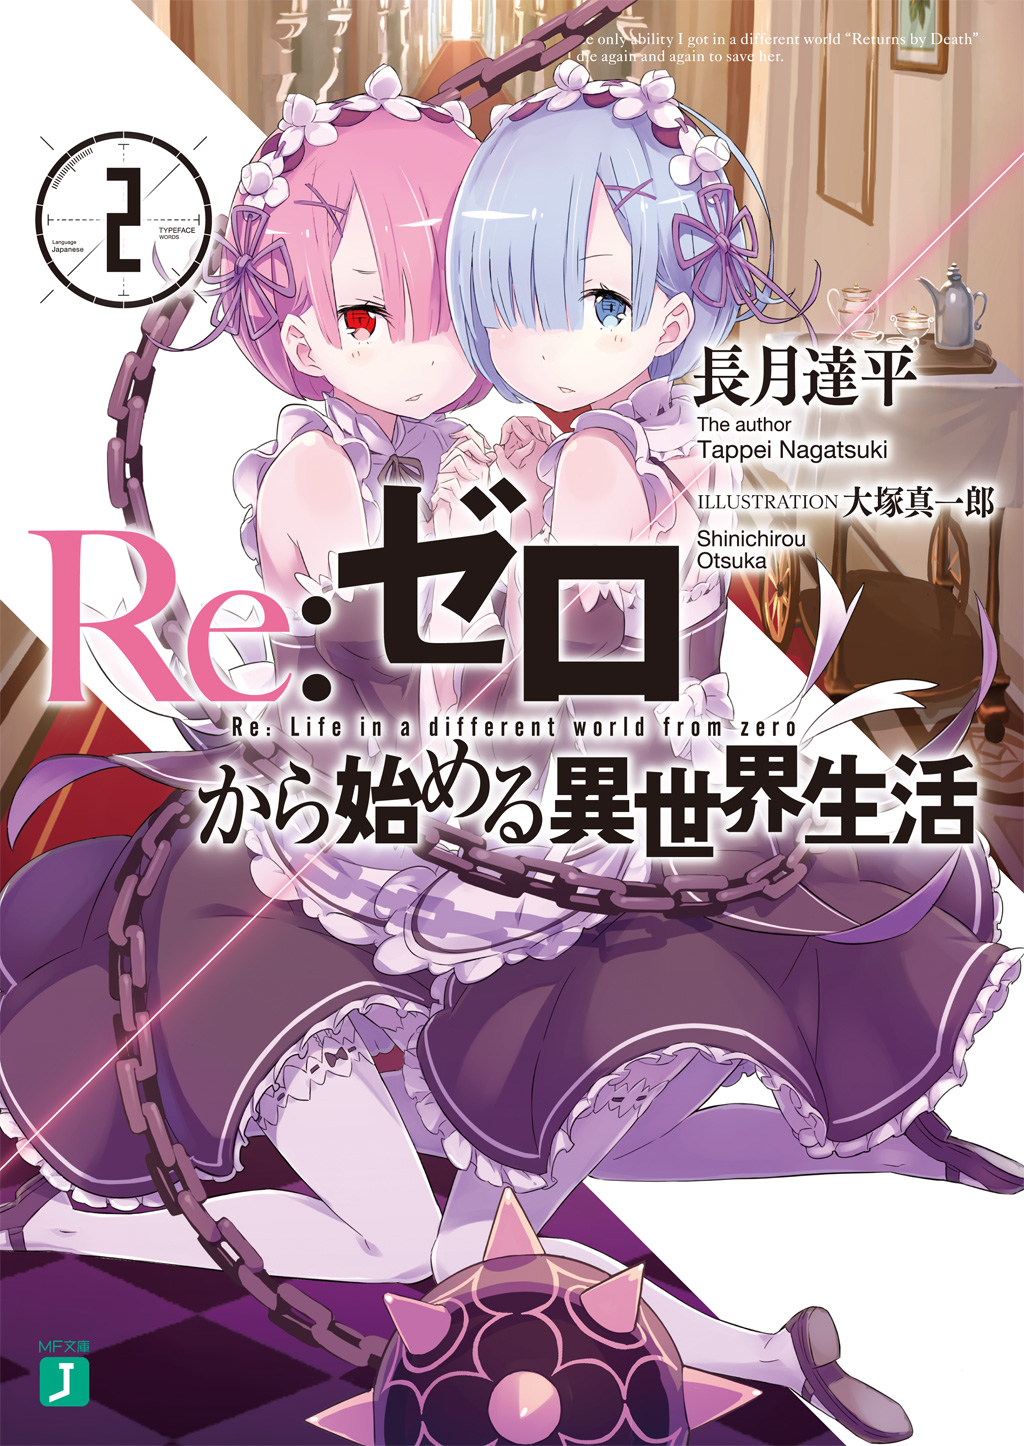 Re:Zero Novel Volume 2 | Re:Zero Wiki | Fandom